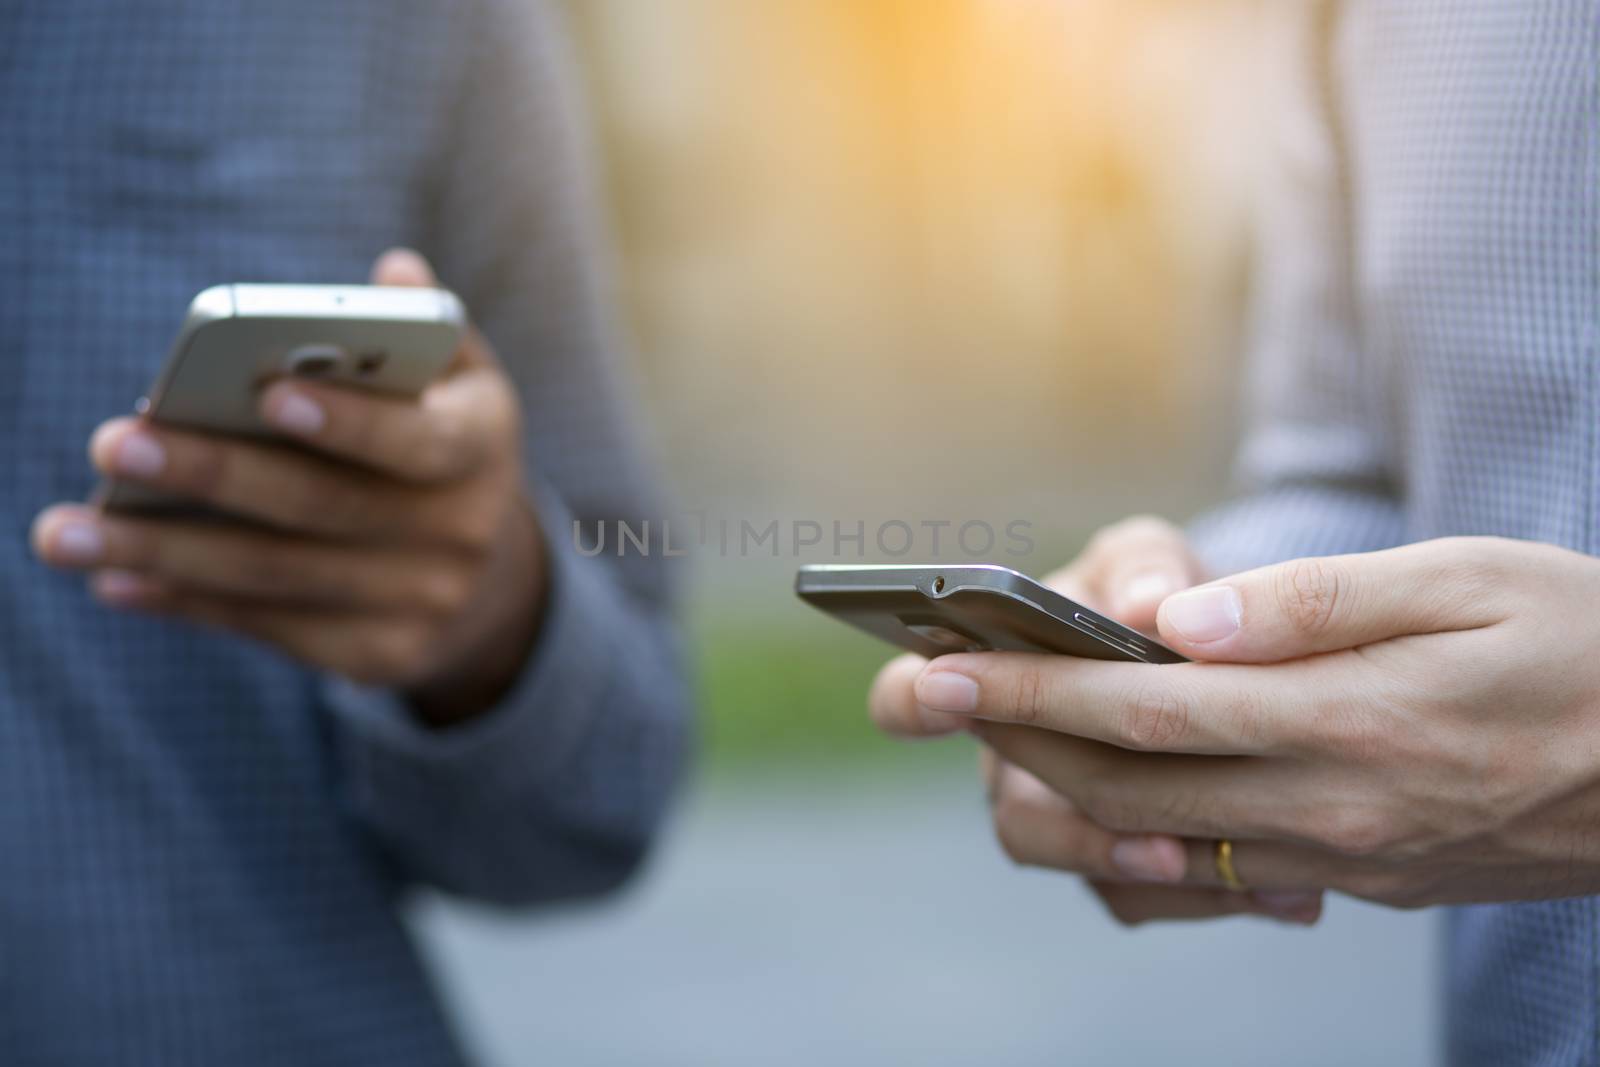 Businessmen use smartphones to contact customers